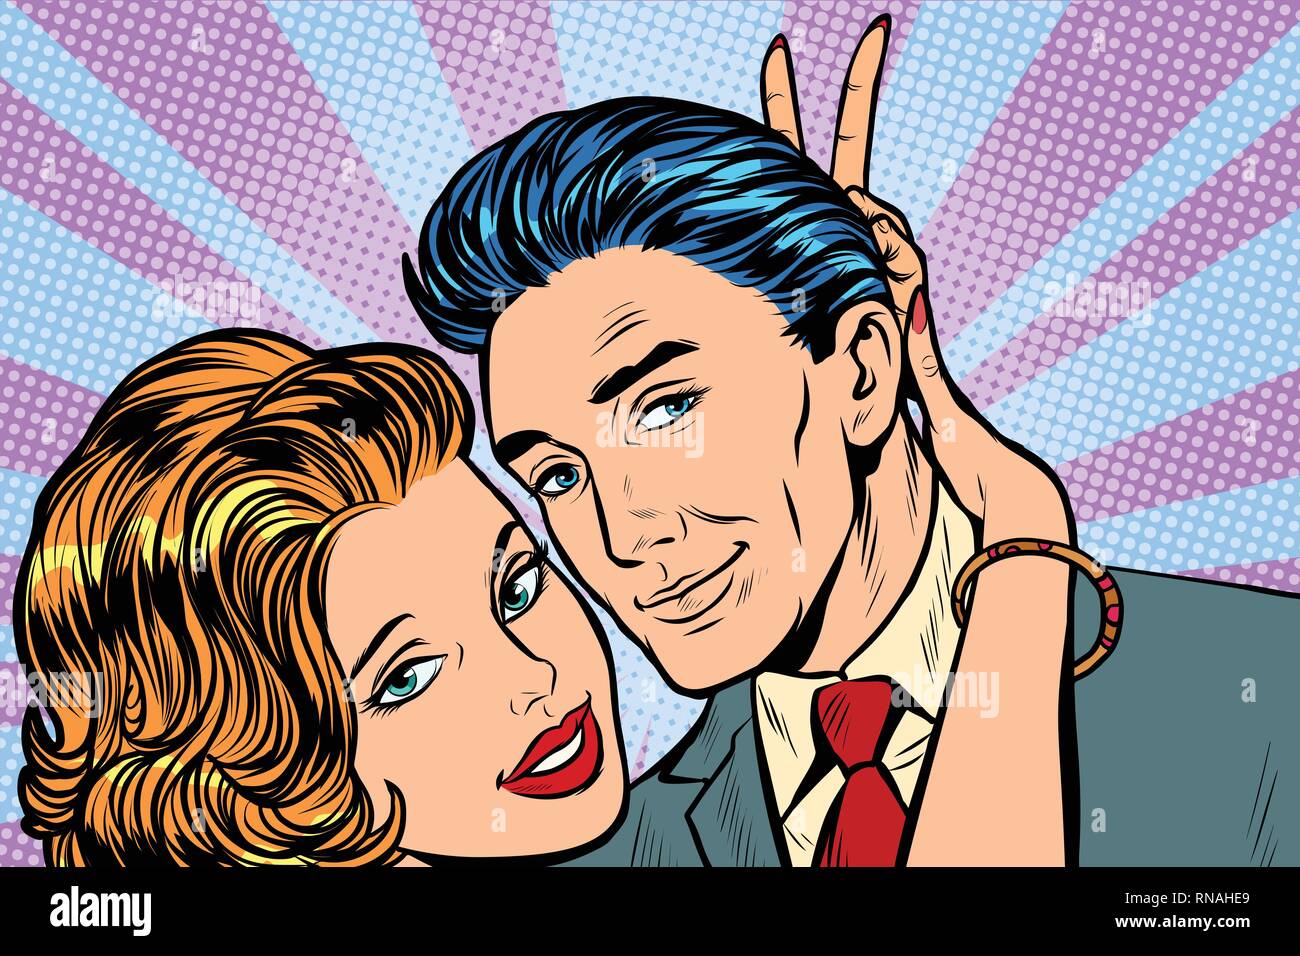 woman puts horns to man, hand gesture joke. Pop art retro vector illustration vintage kitsch Stock Vector